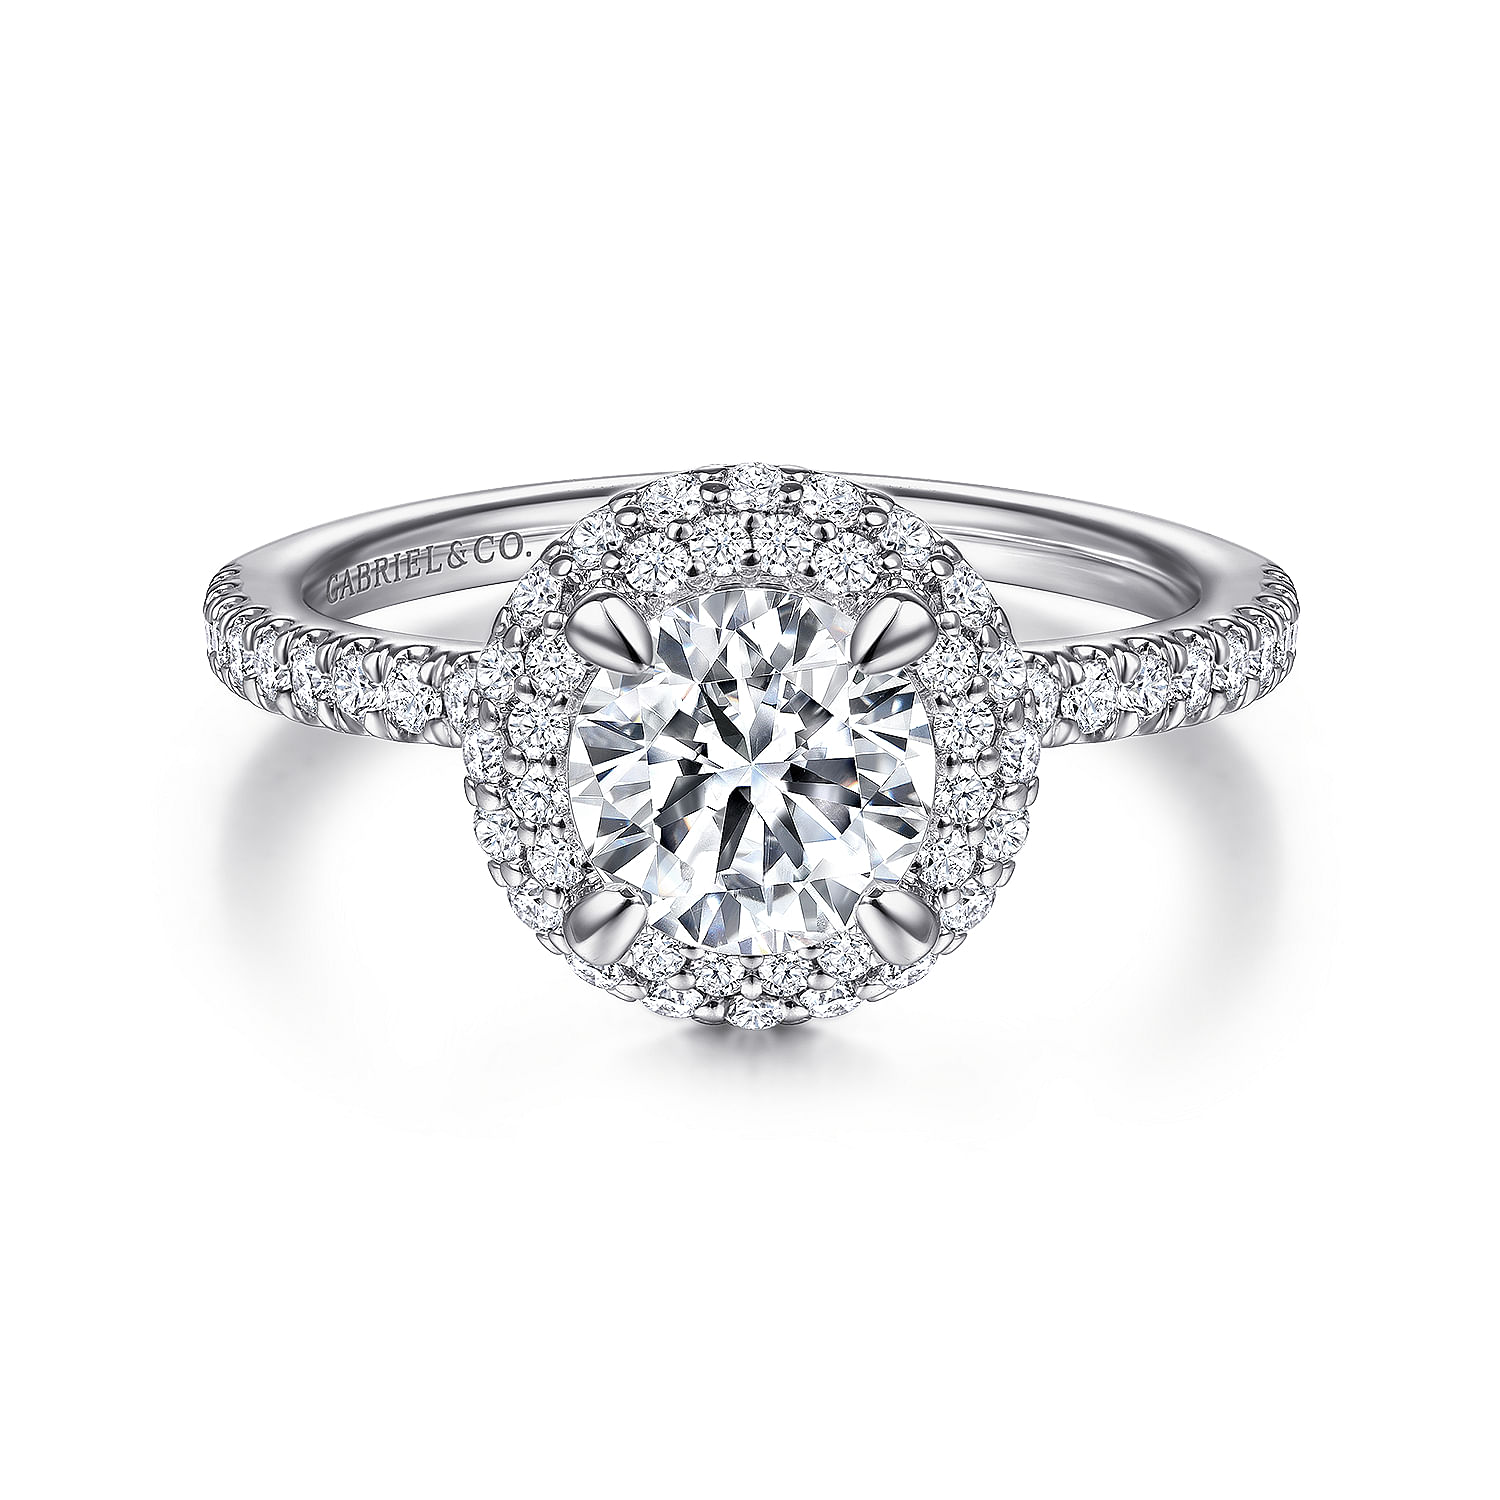 Gabriel - 14K White Gold Round Double Halo Diamond Engagement Ring